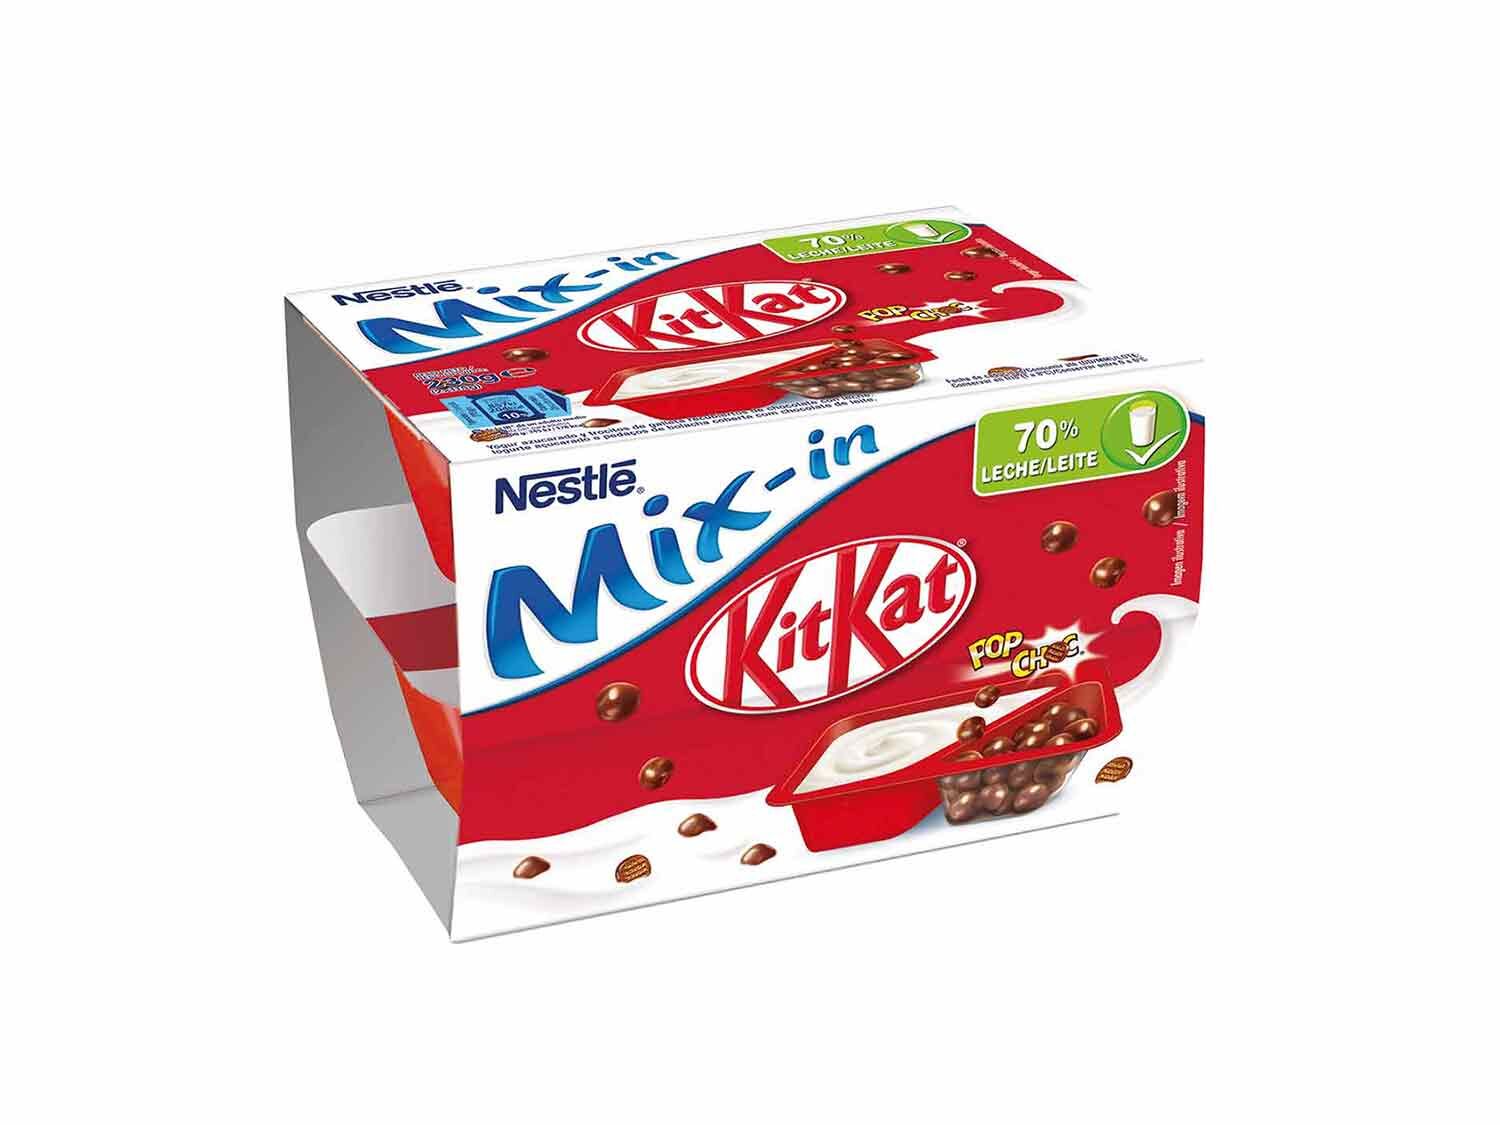 Nestlé Kit Kat mix-in lidl